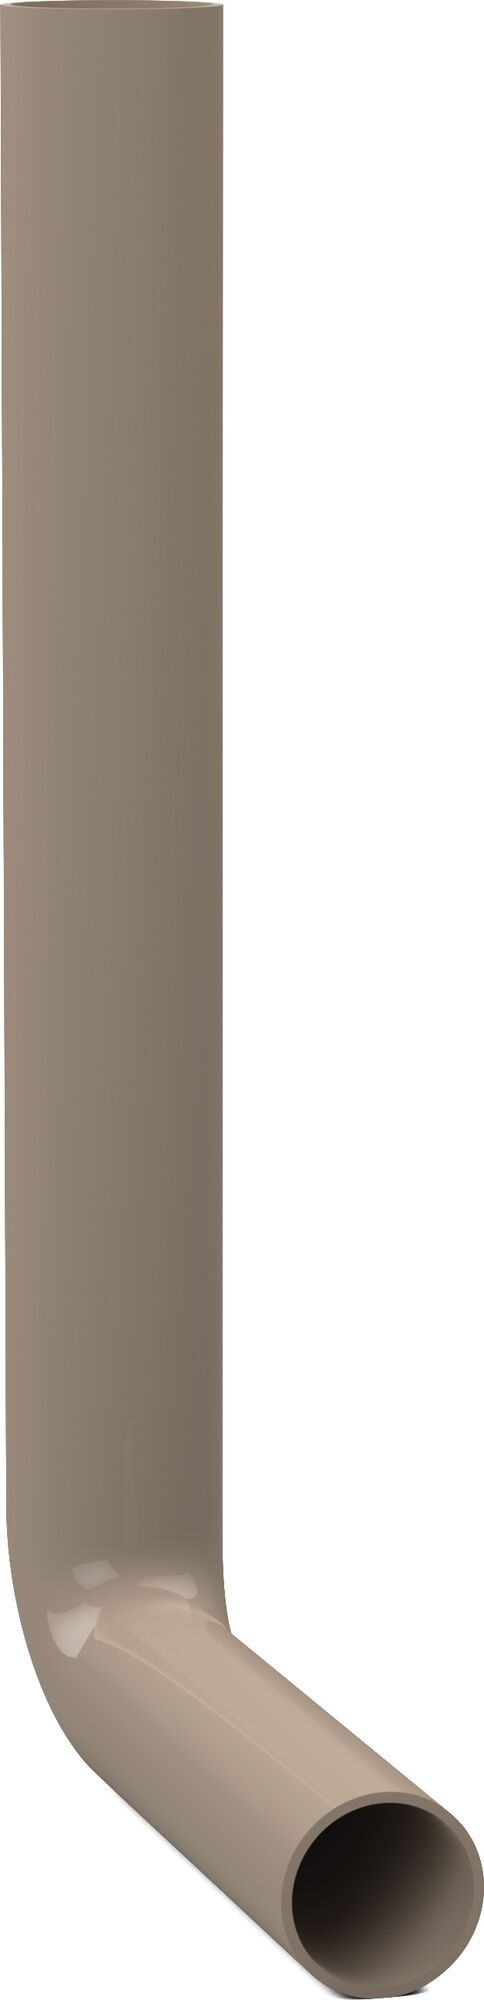 SPÜLROHRBOGEN 380 x 210 mm, beige